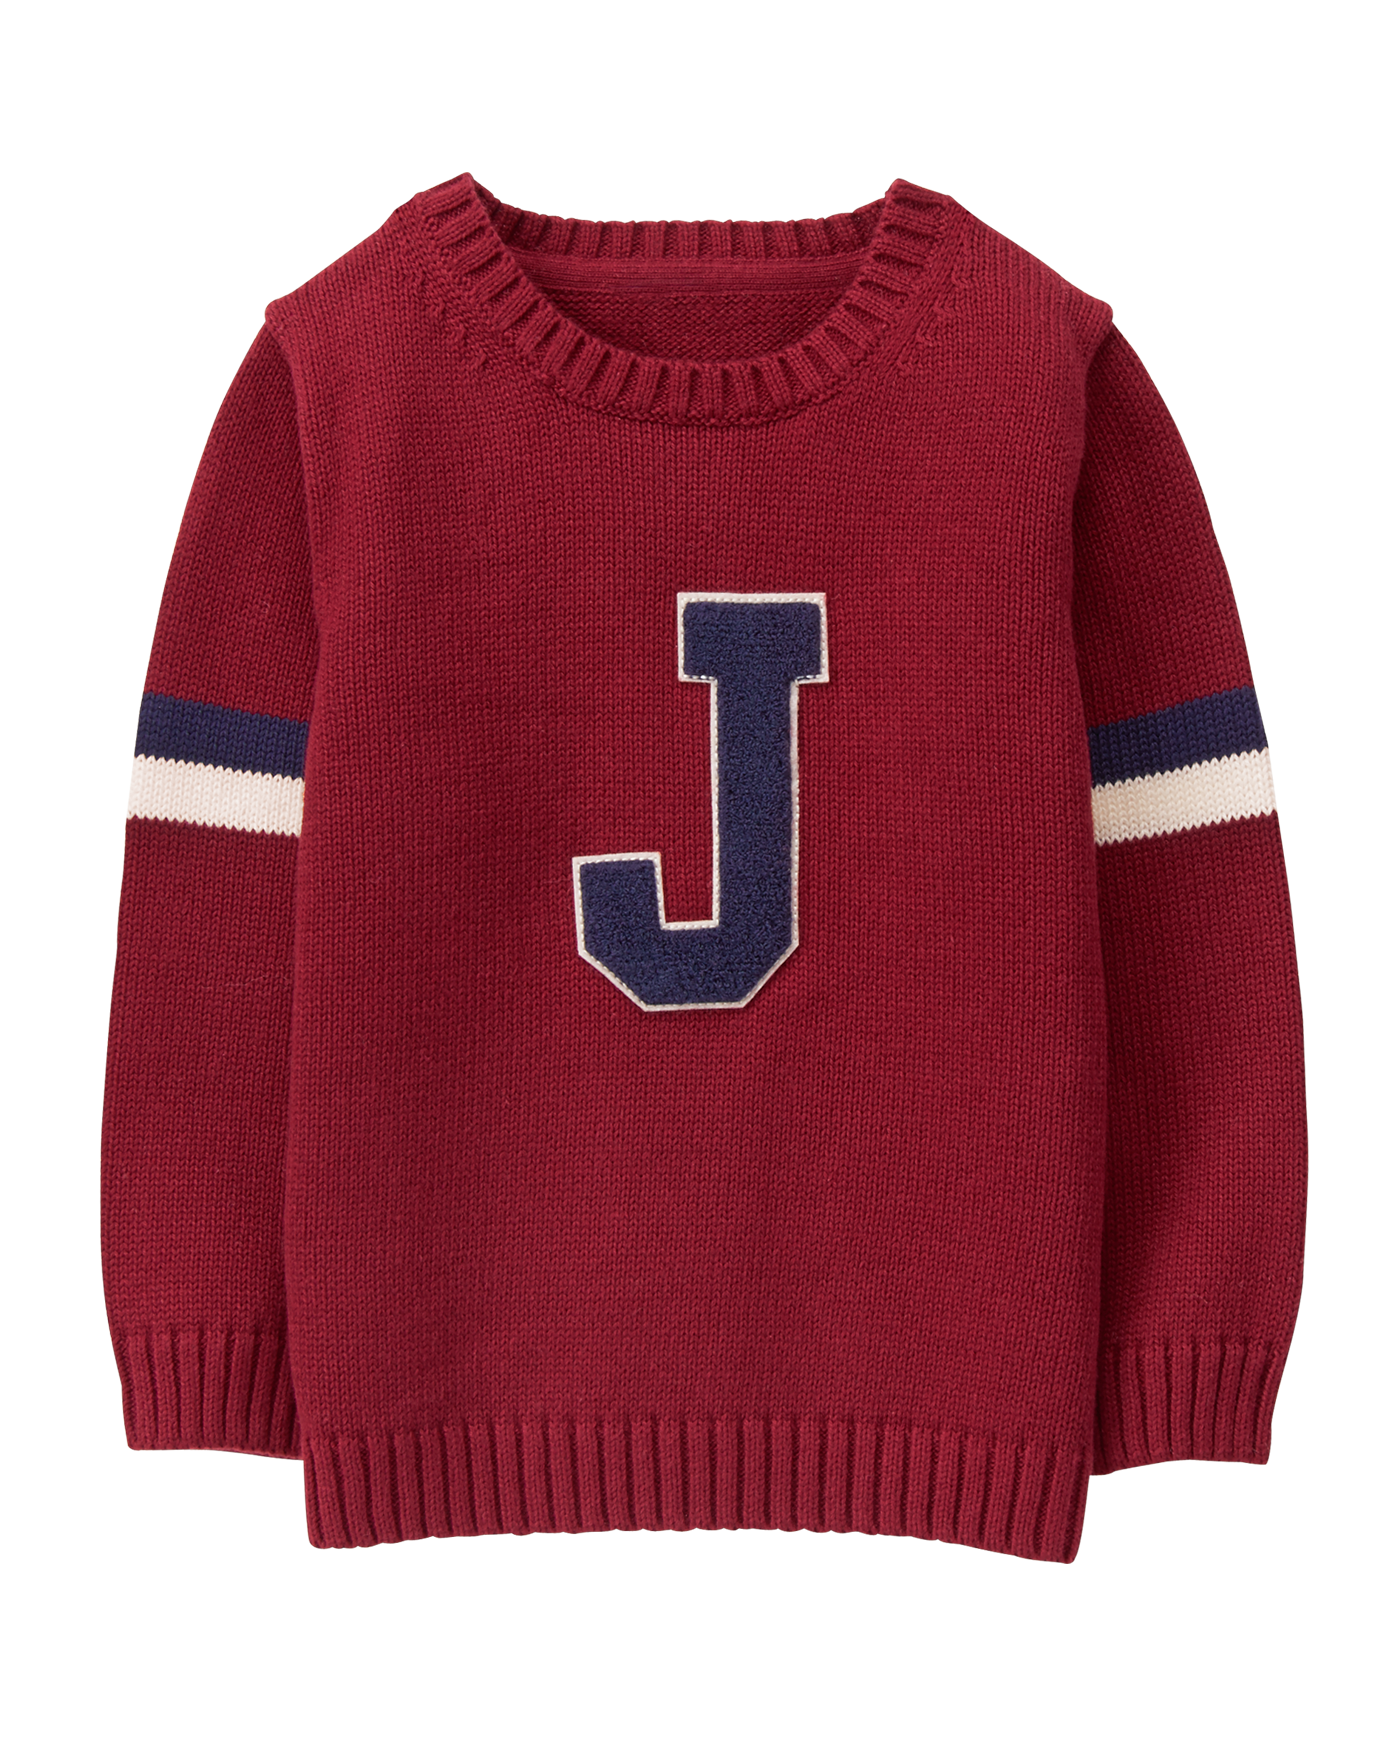 Varsity J Patch Sweater image number 0